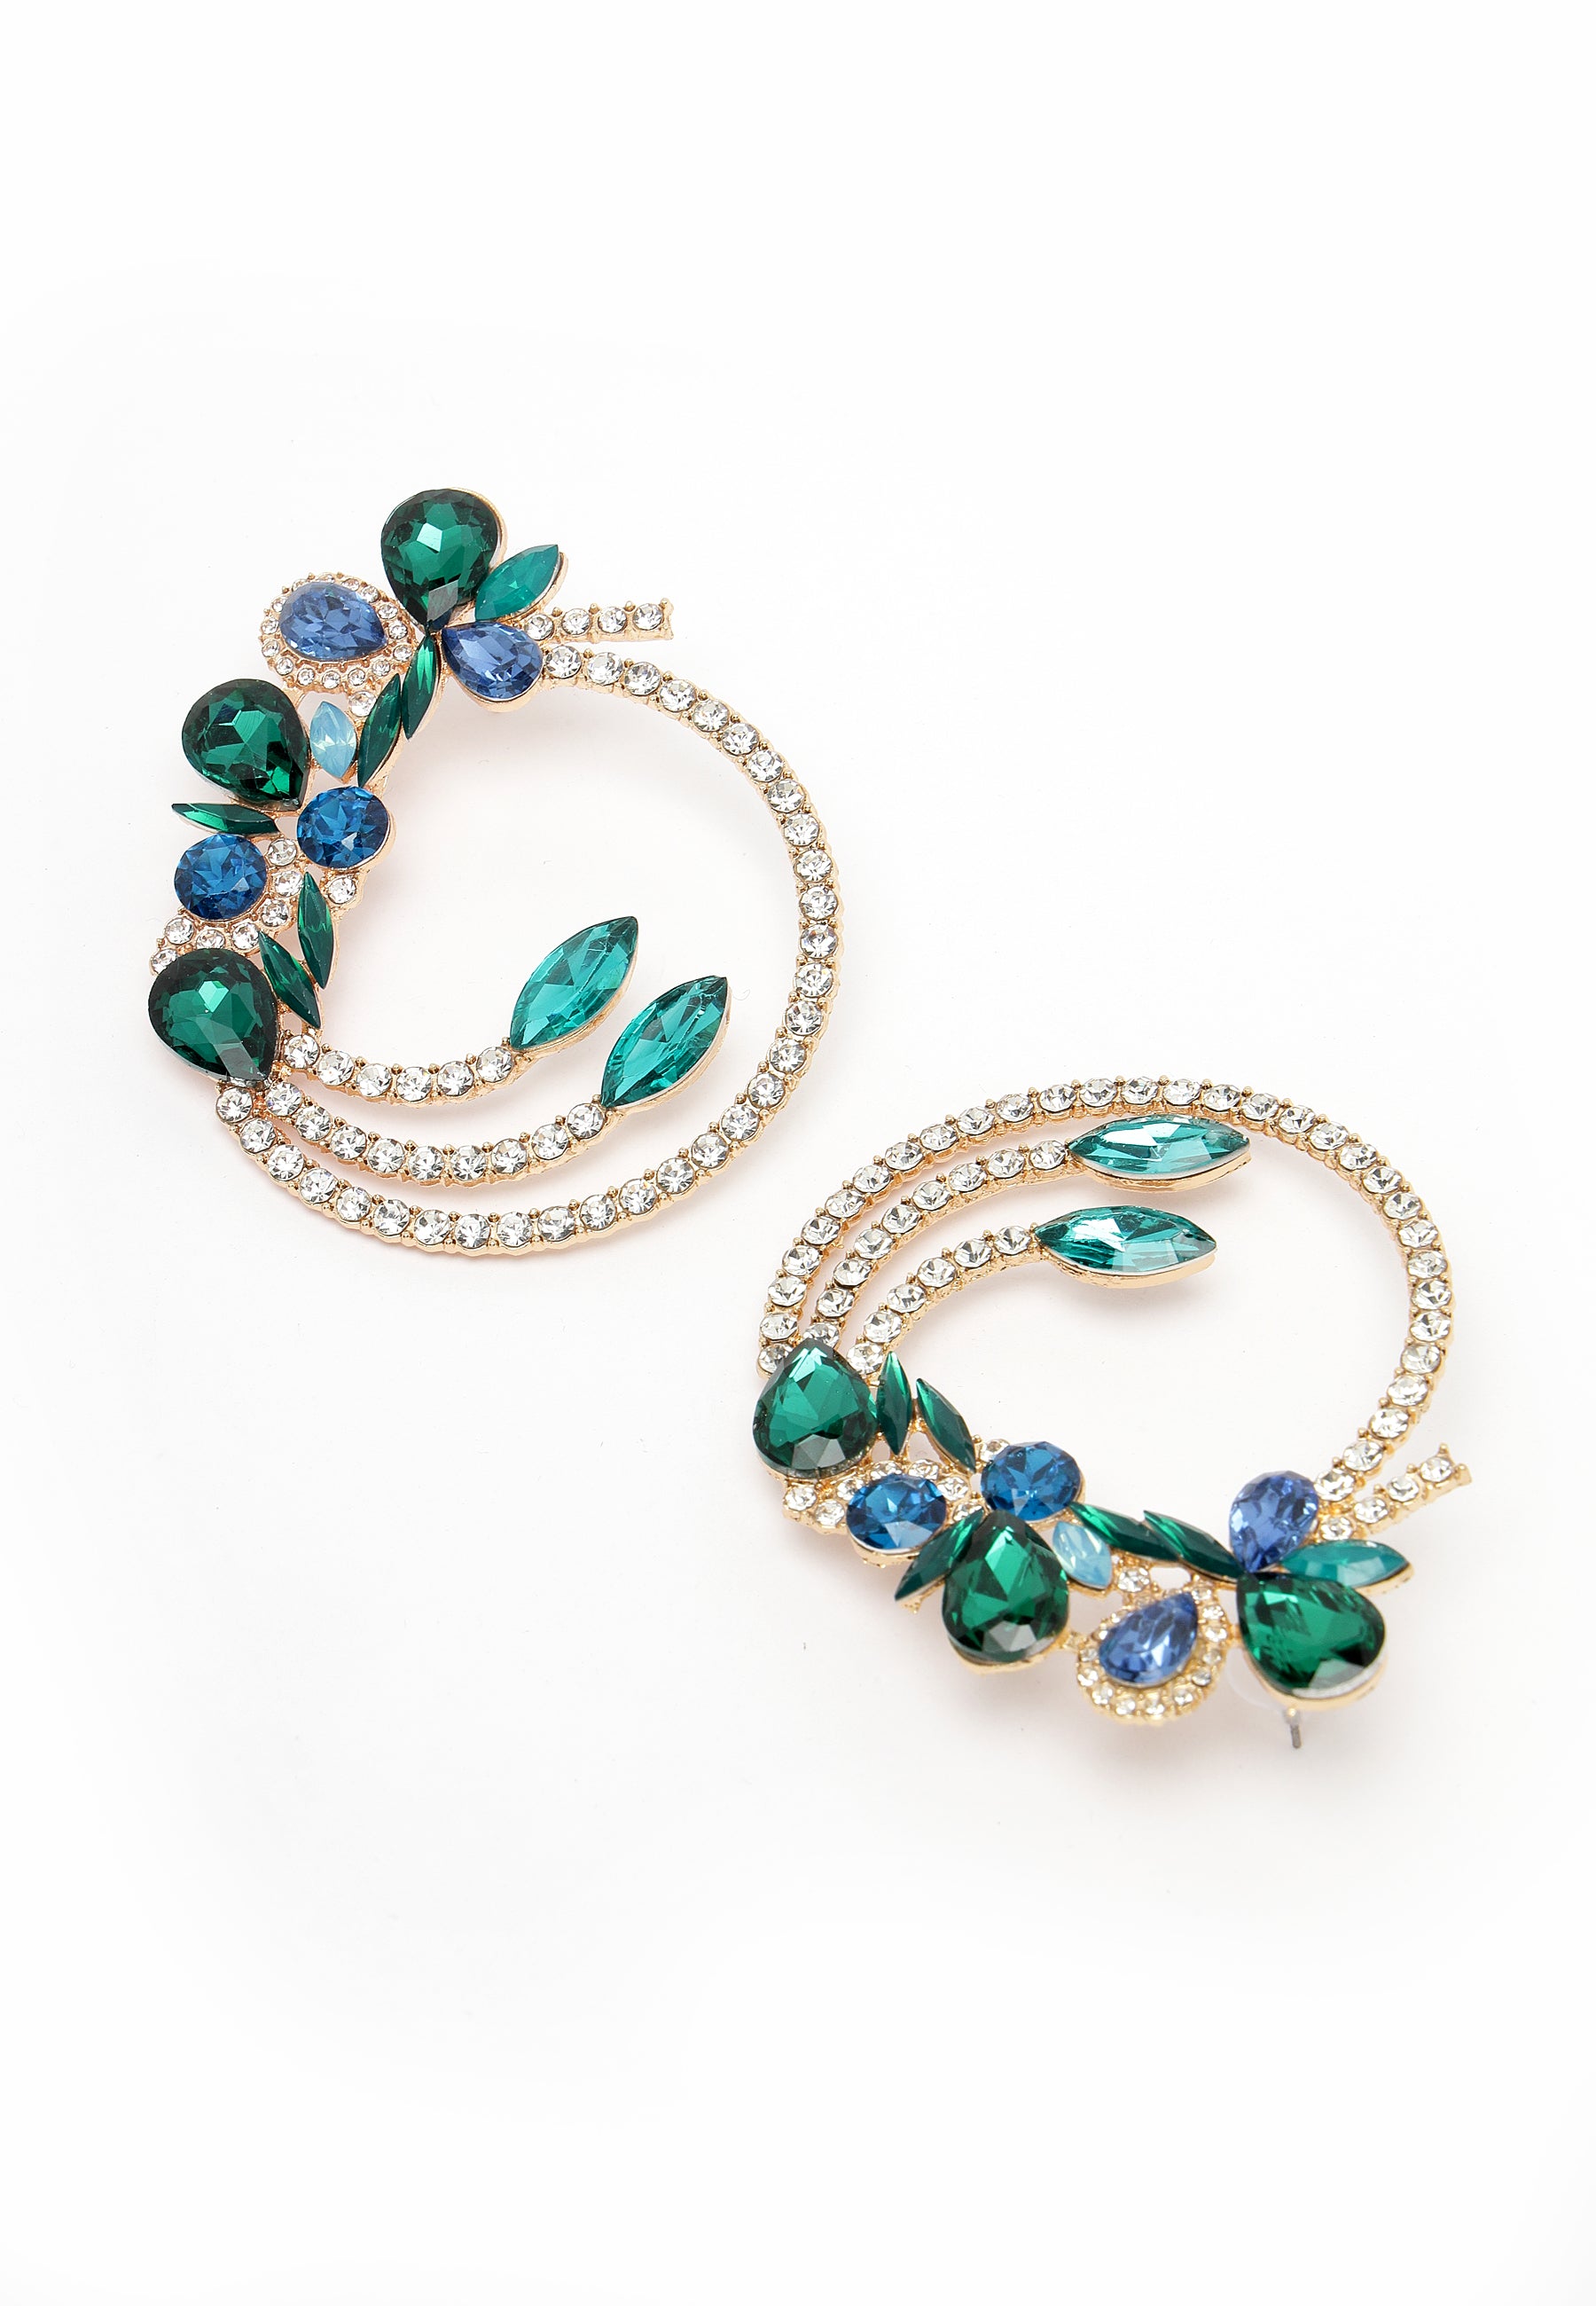 Multi-Layer Circle Crystal Earrings In Green